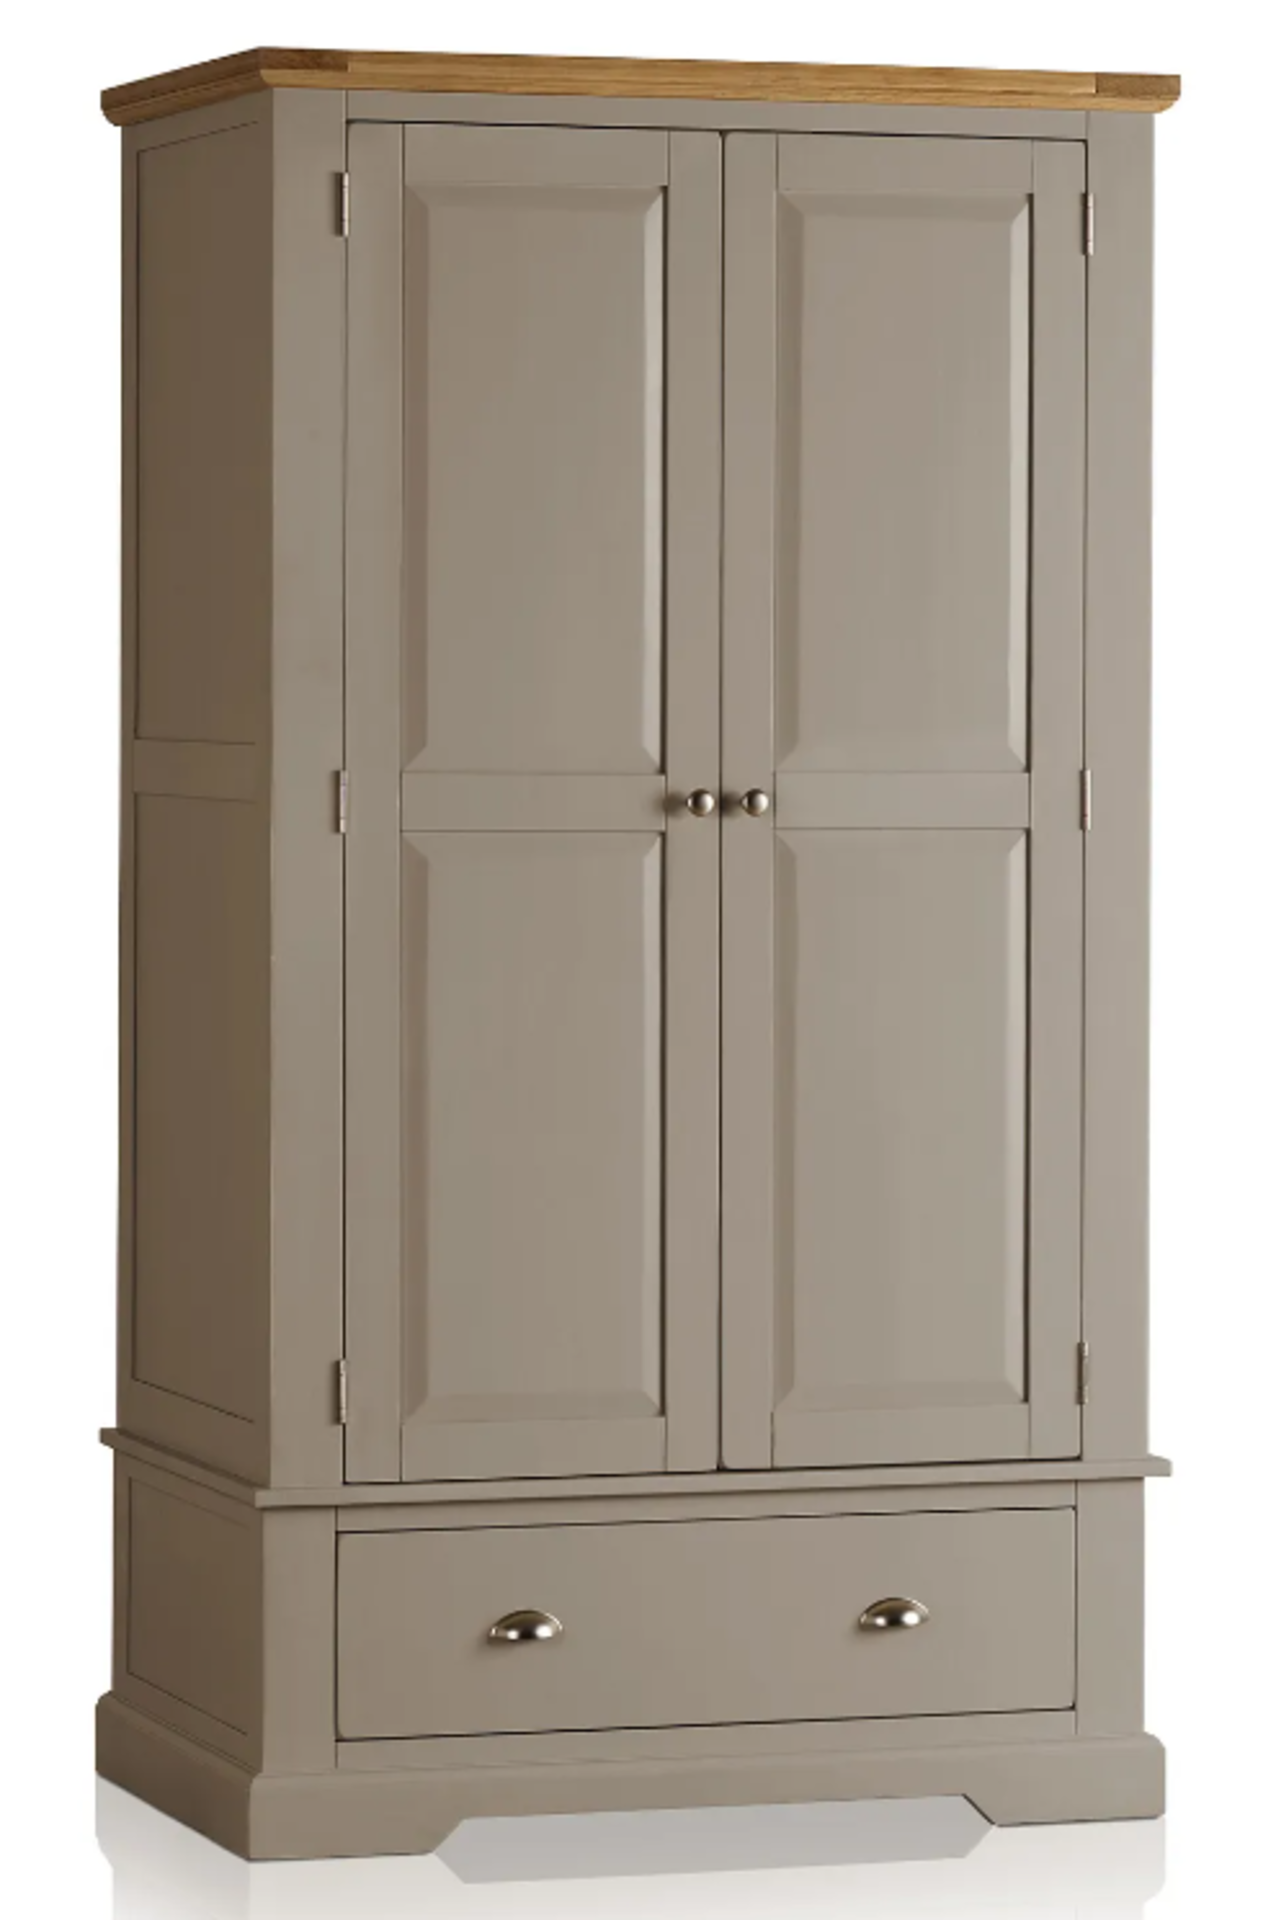 ST. IVES Natural Solid Oak & Grey Paint Double Wardrobe. RRP £959.99. The St Ives double wardrobe is